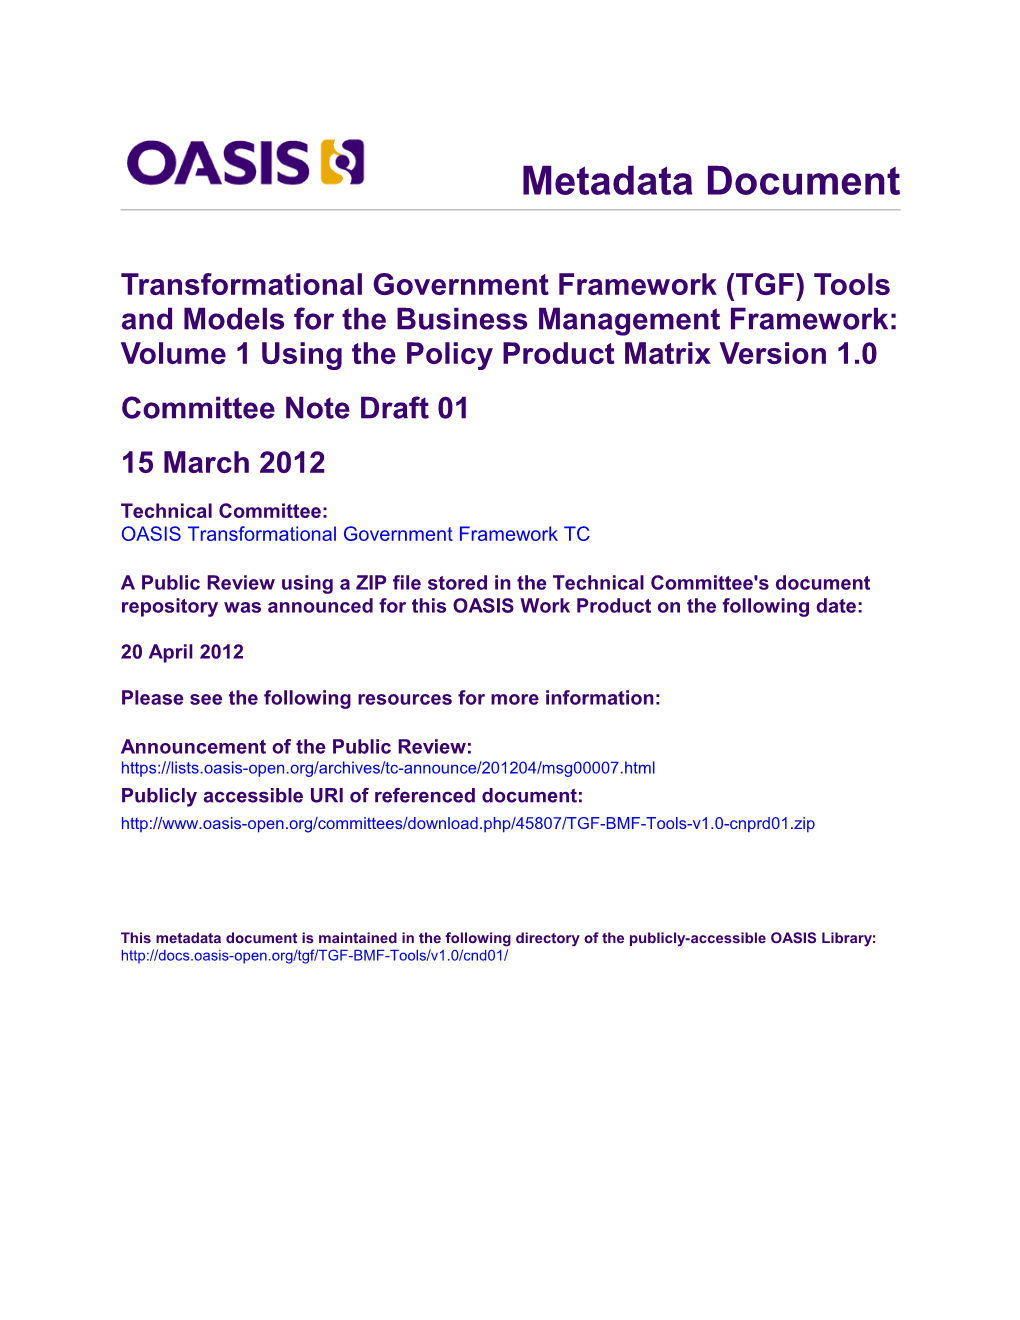 OASIS Metadata Document